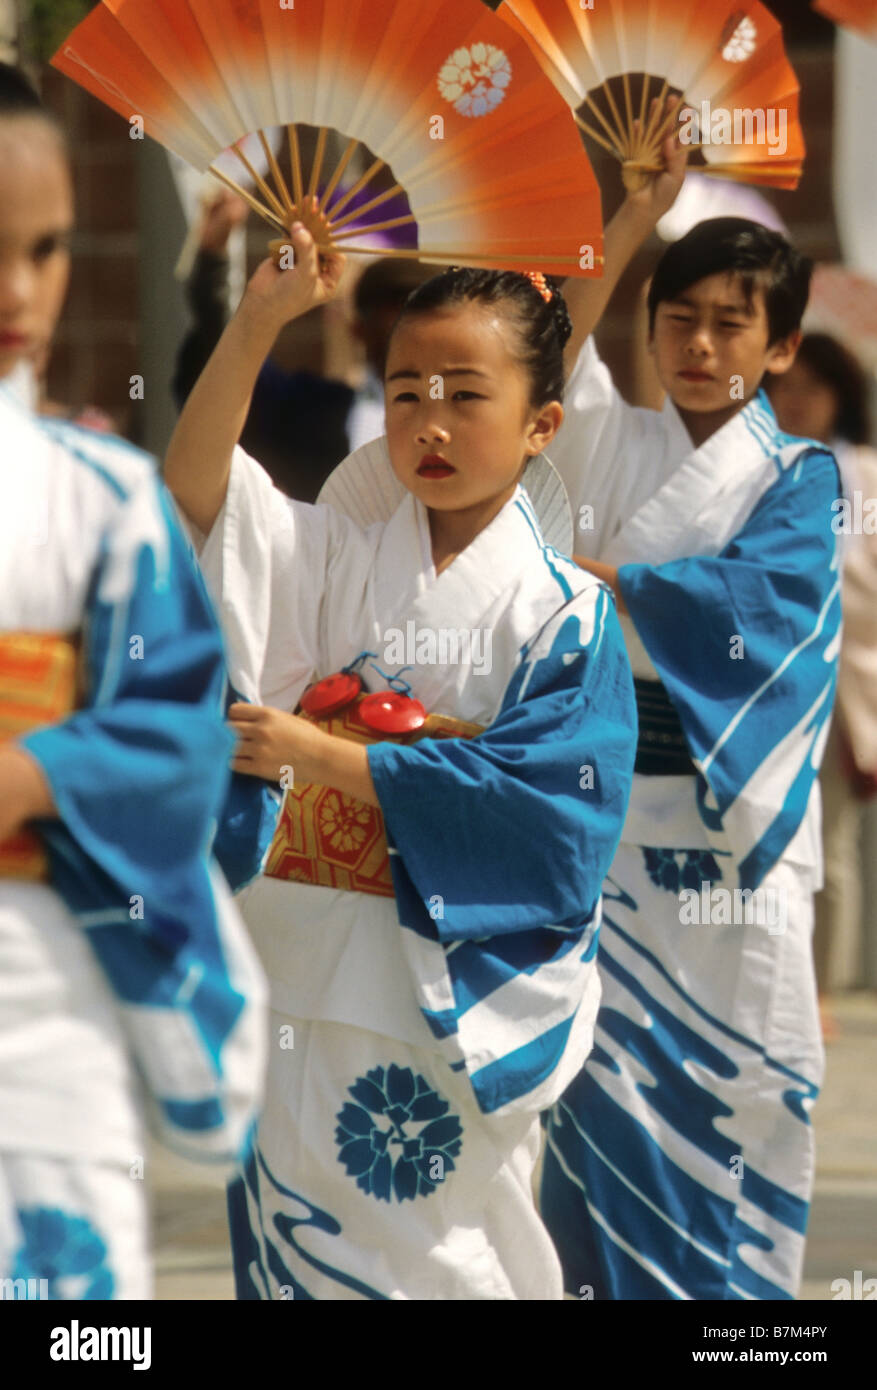 Young dancers dressed in traditional yukata kimonos perform at Japantown Summer Festival San Francisco California Stock Photo